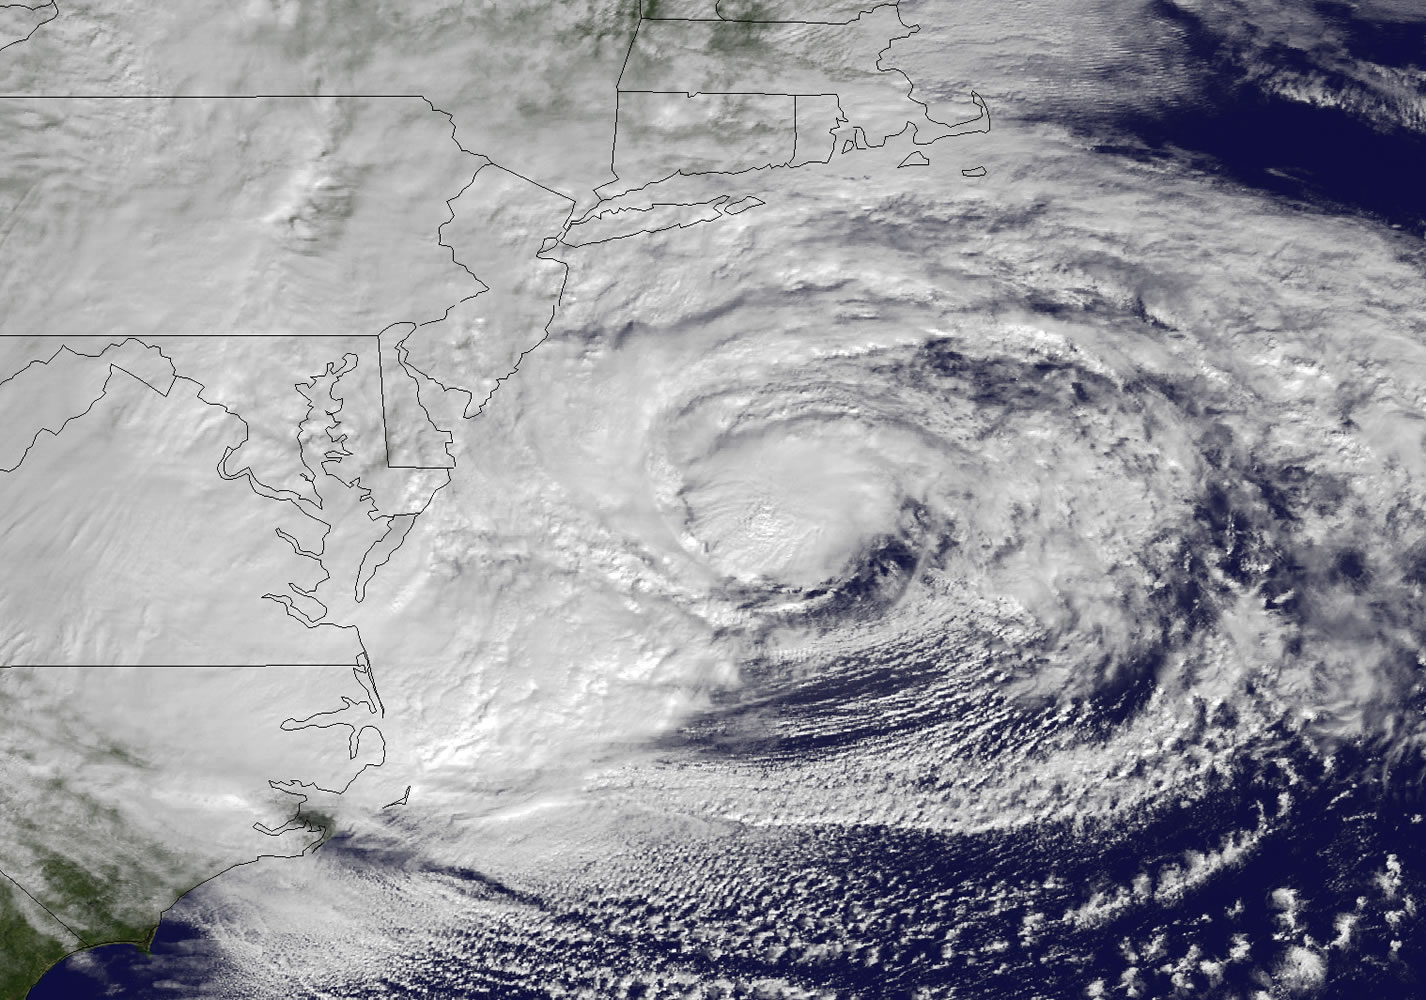 Hurricane Sandy swirls off the Mid-Atlantic coastline in October 2012, as captured by satellite.